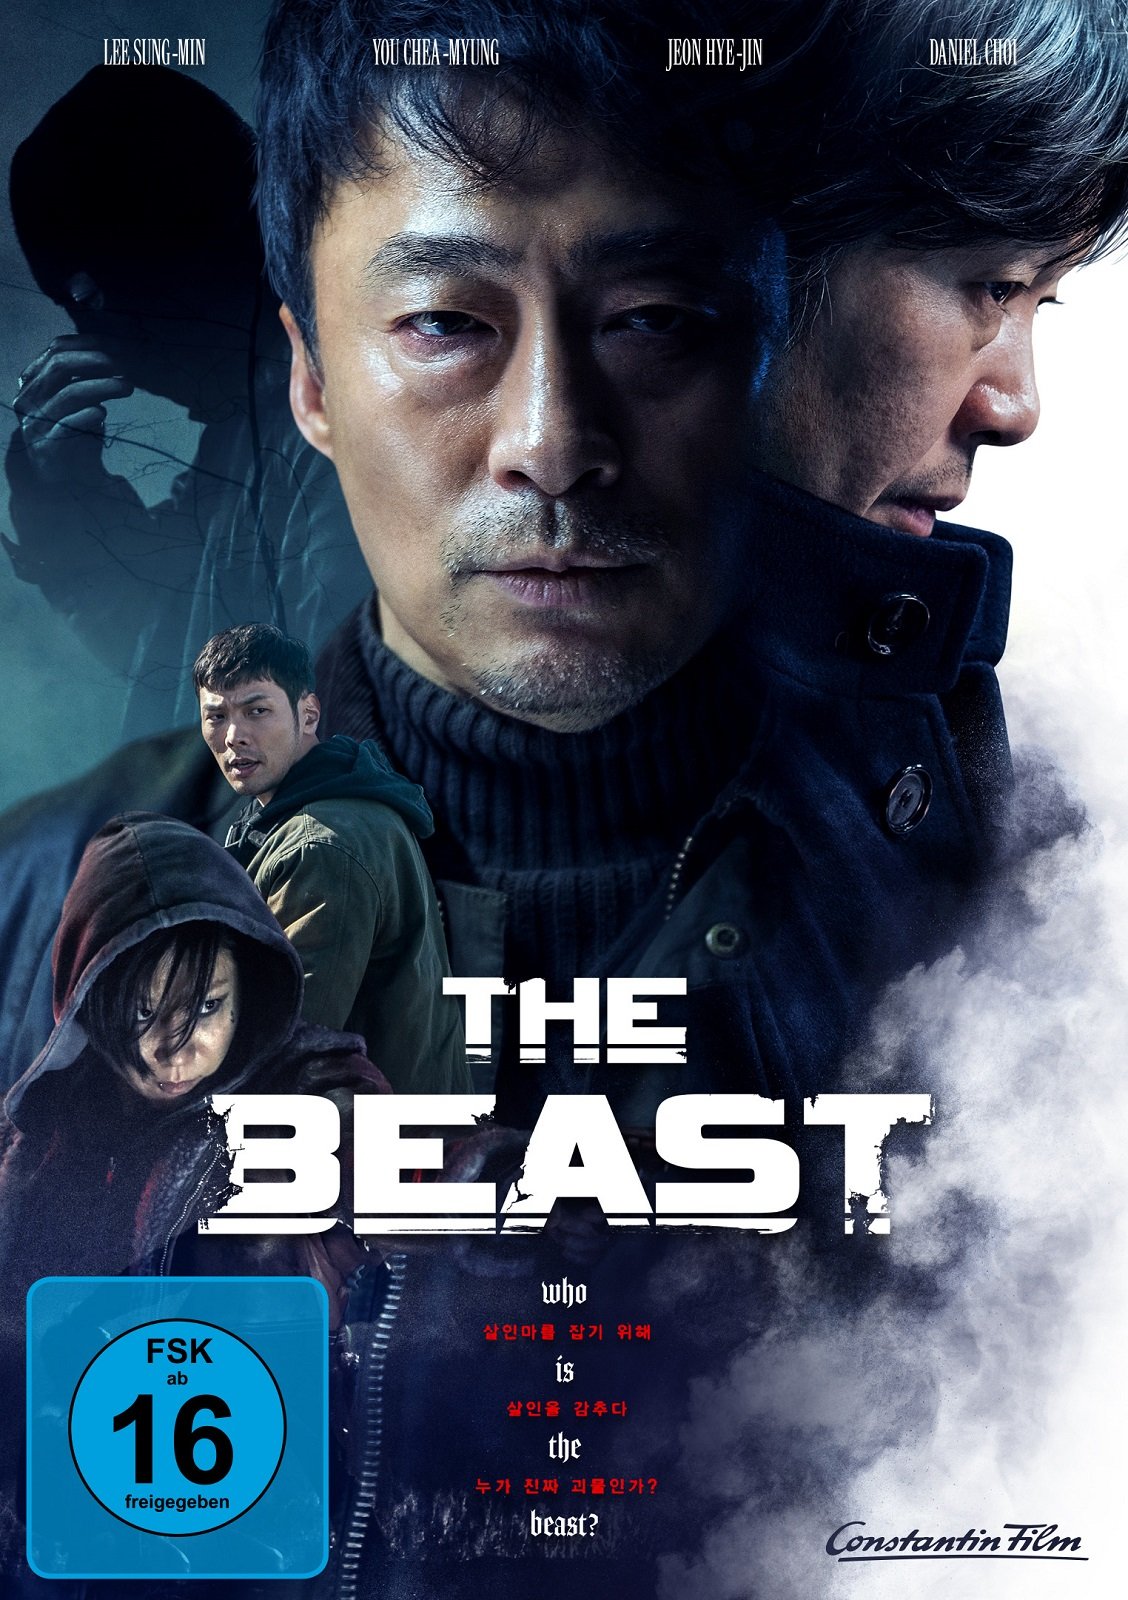 The Beast Film 2019 FILMSTARTS.de